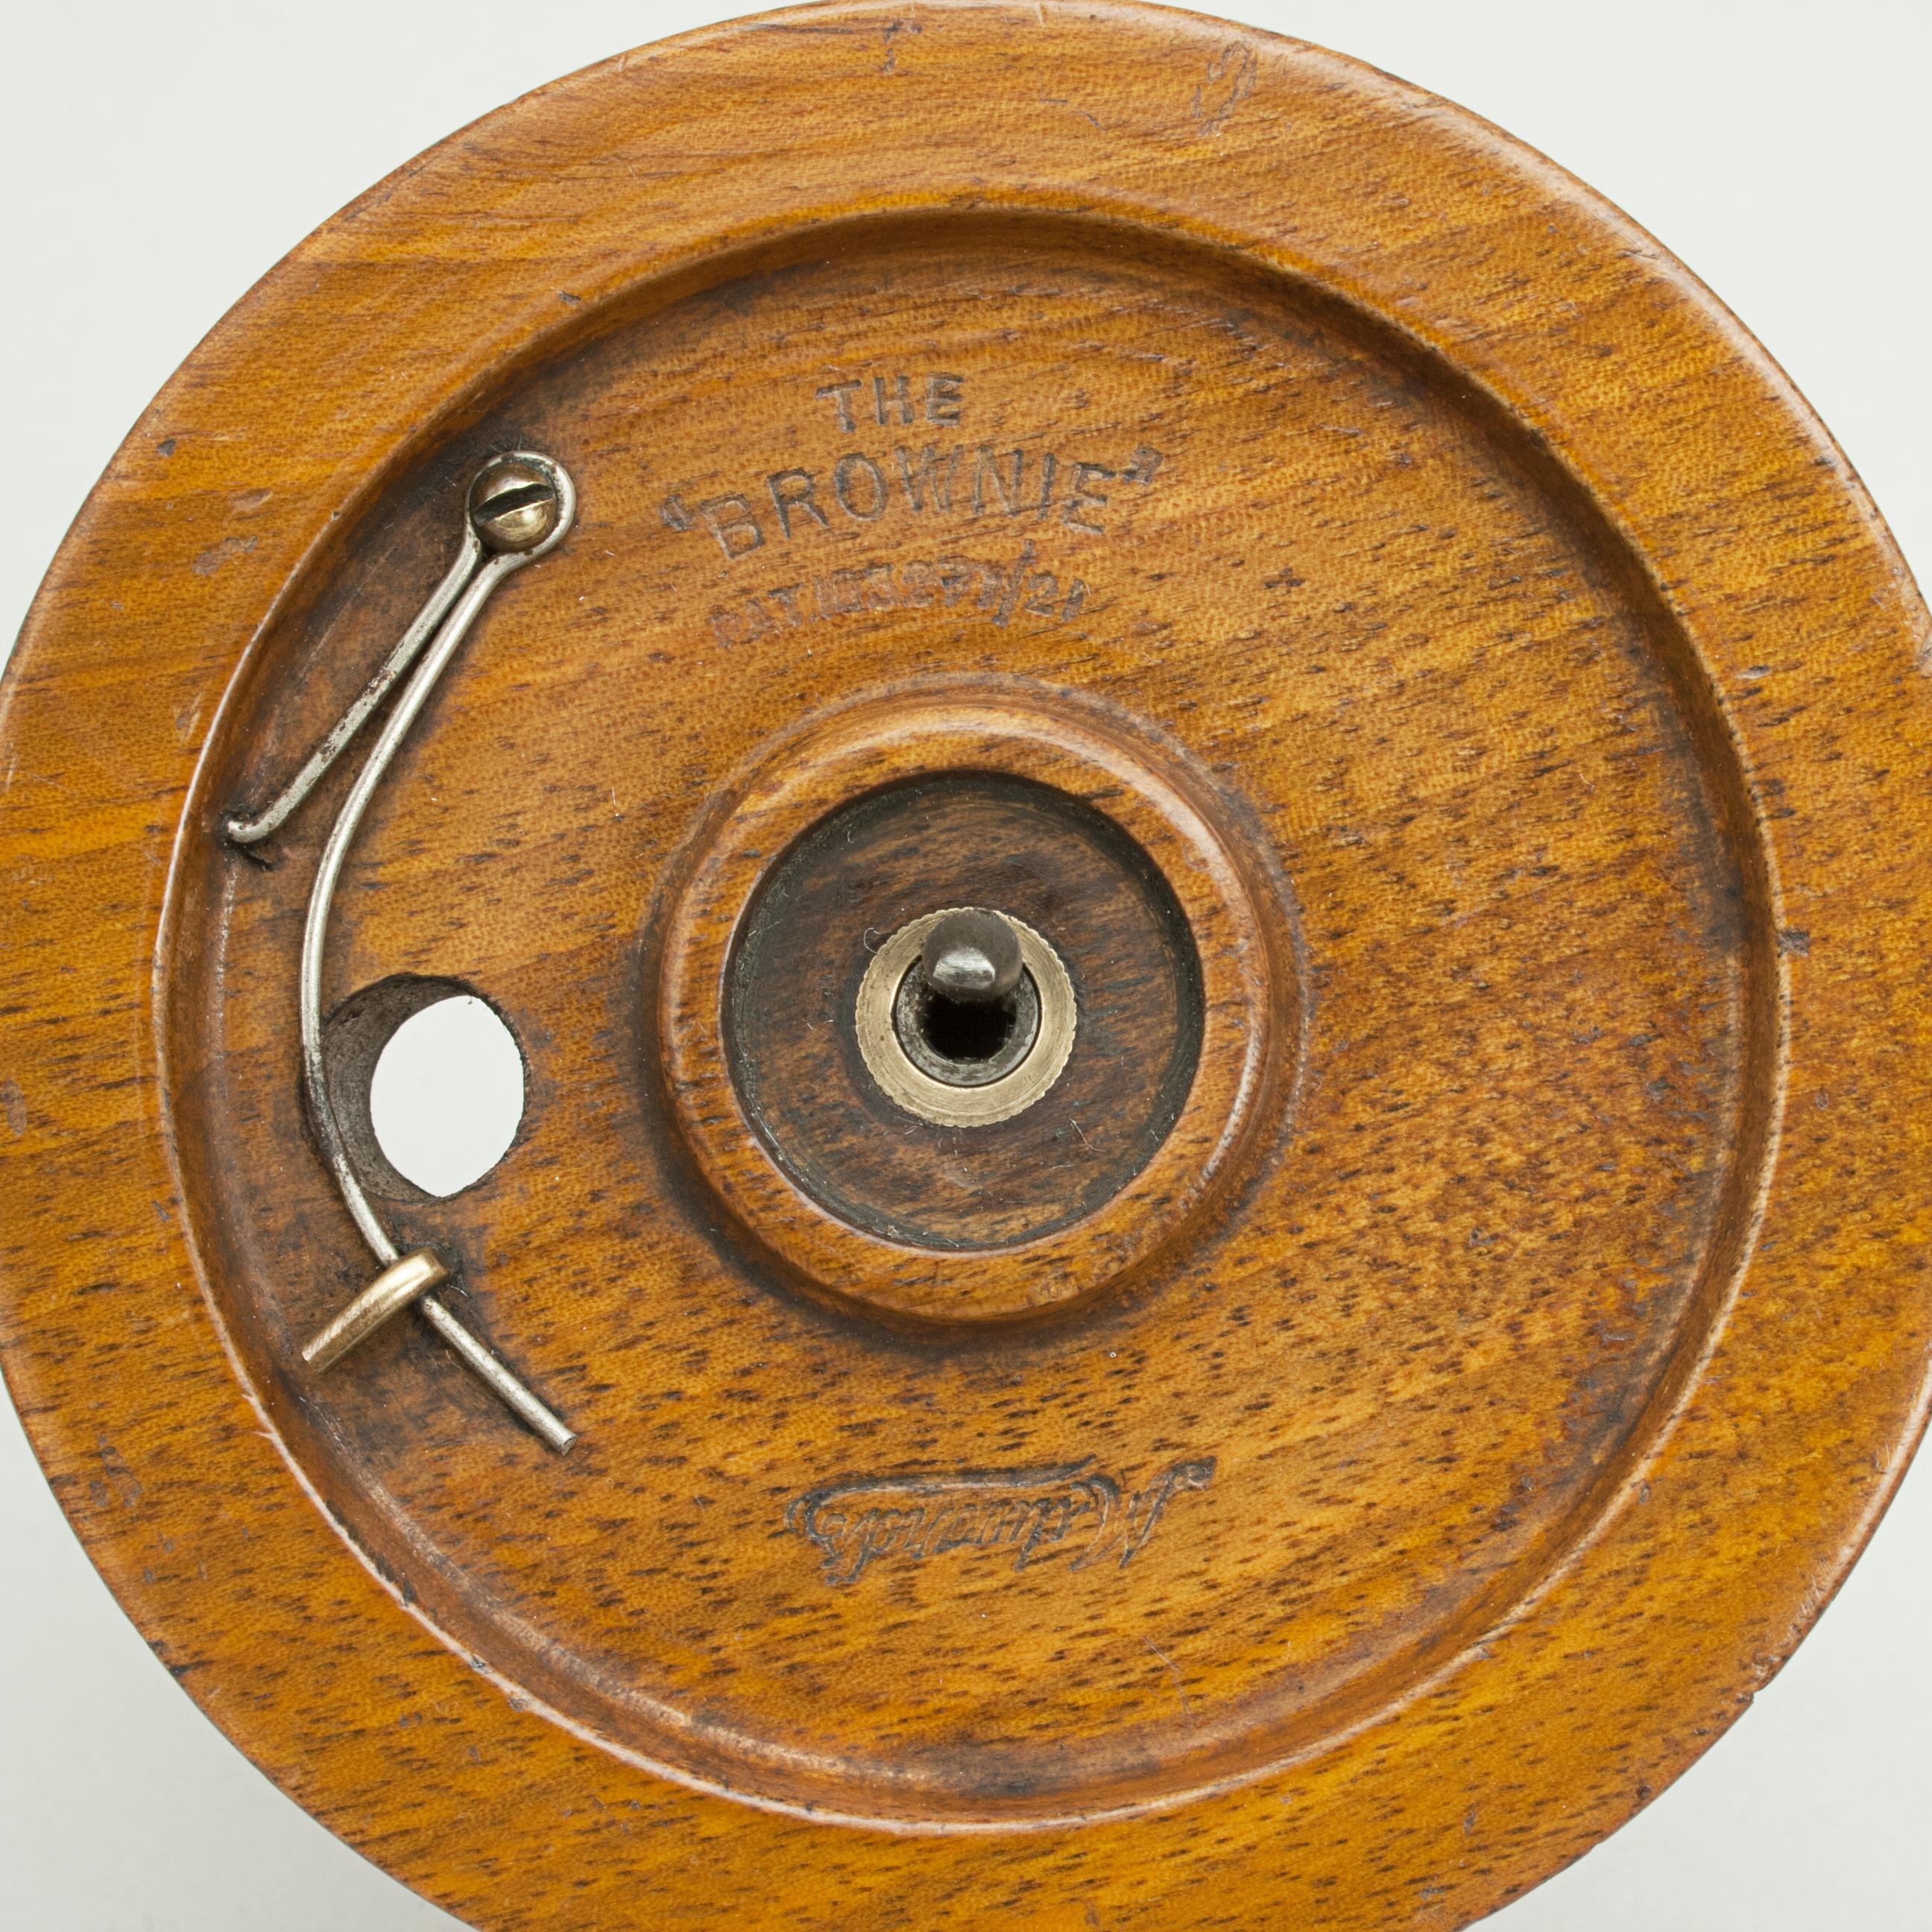 Brownie Fishing Reel by Millward, 1921 Patent 1